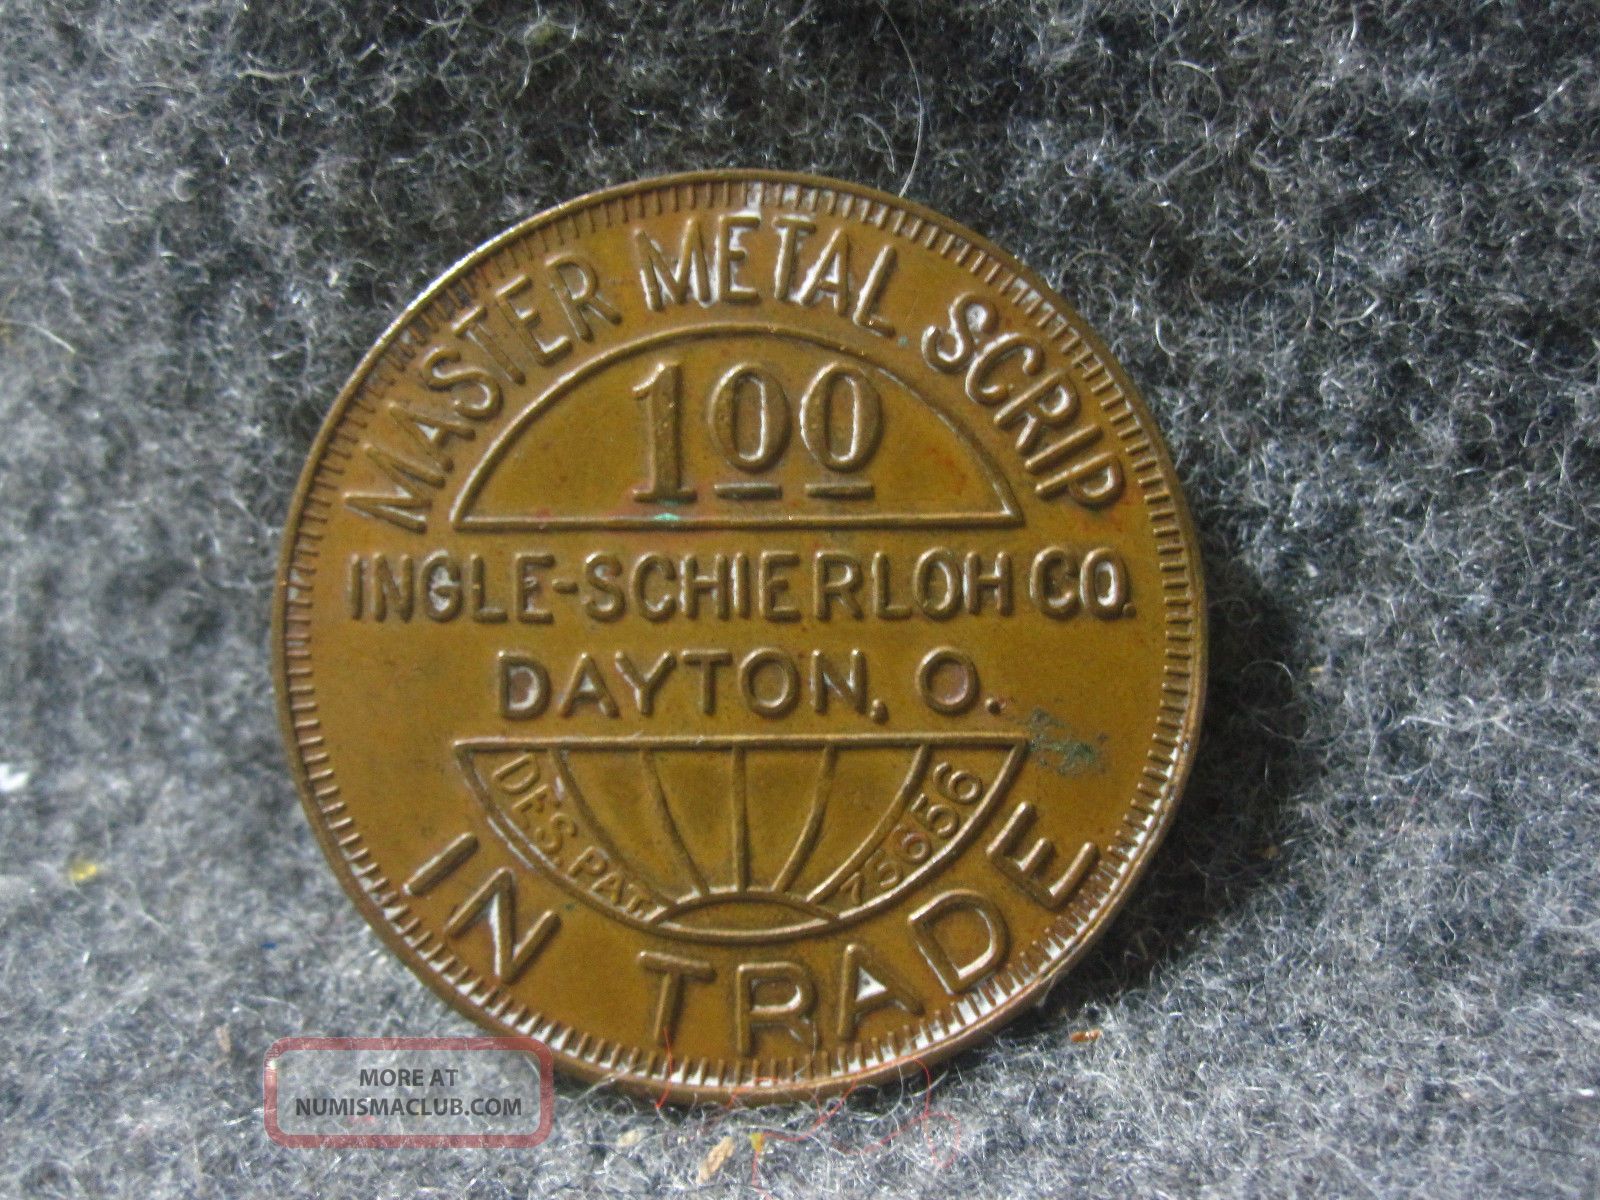 Antique Panther Coal Company $1 Scrip Coin Inger - Shierloh Co.  Dayton Ohio.  Vgc Stocks & Bonds, Scripophily photo